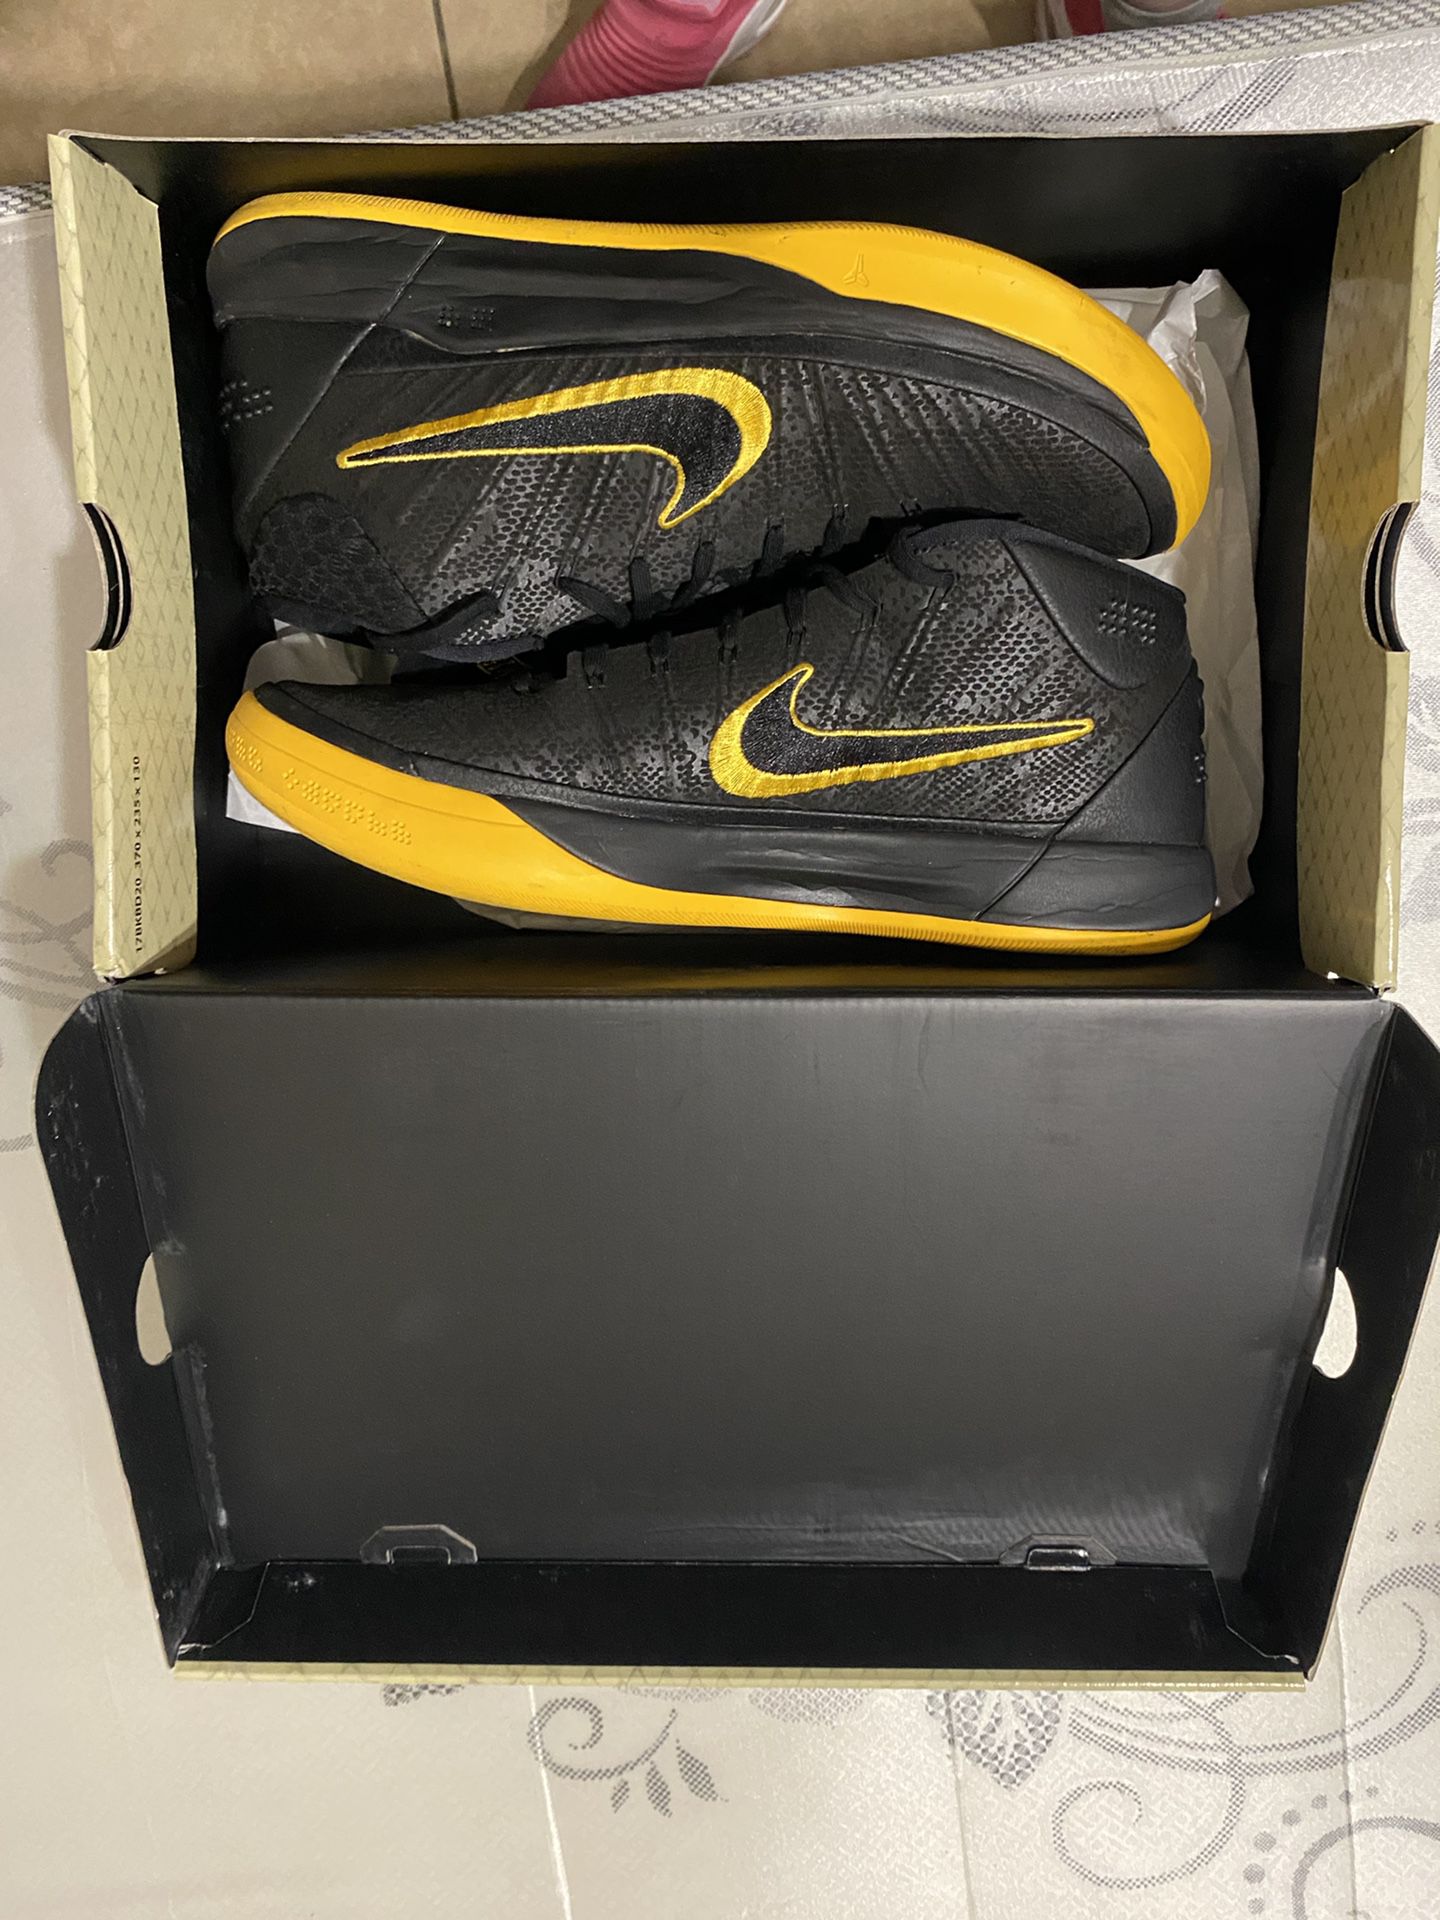 Kobe Bryant Nike’s shoes